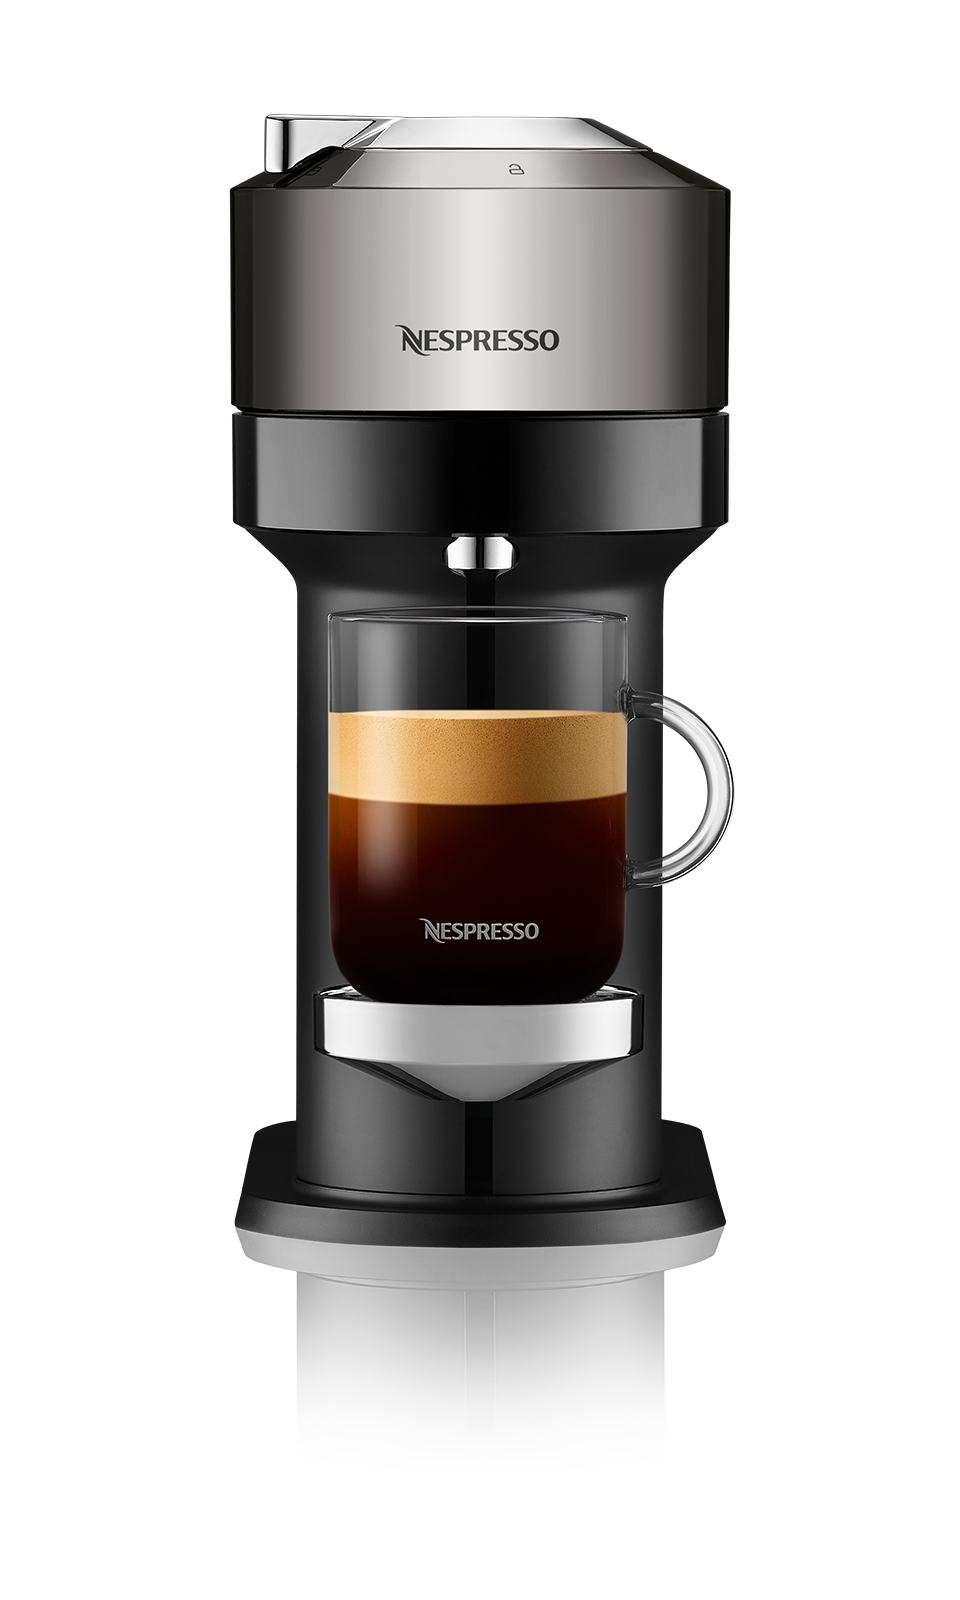 Vertuo Next Deluxe Chrome, Vertuo Coffee Machine